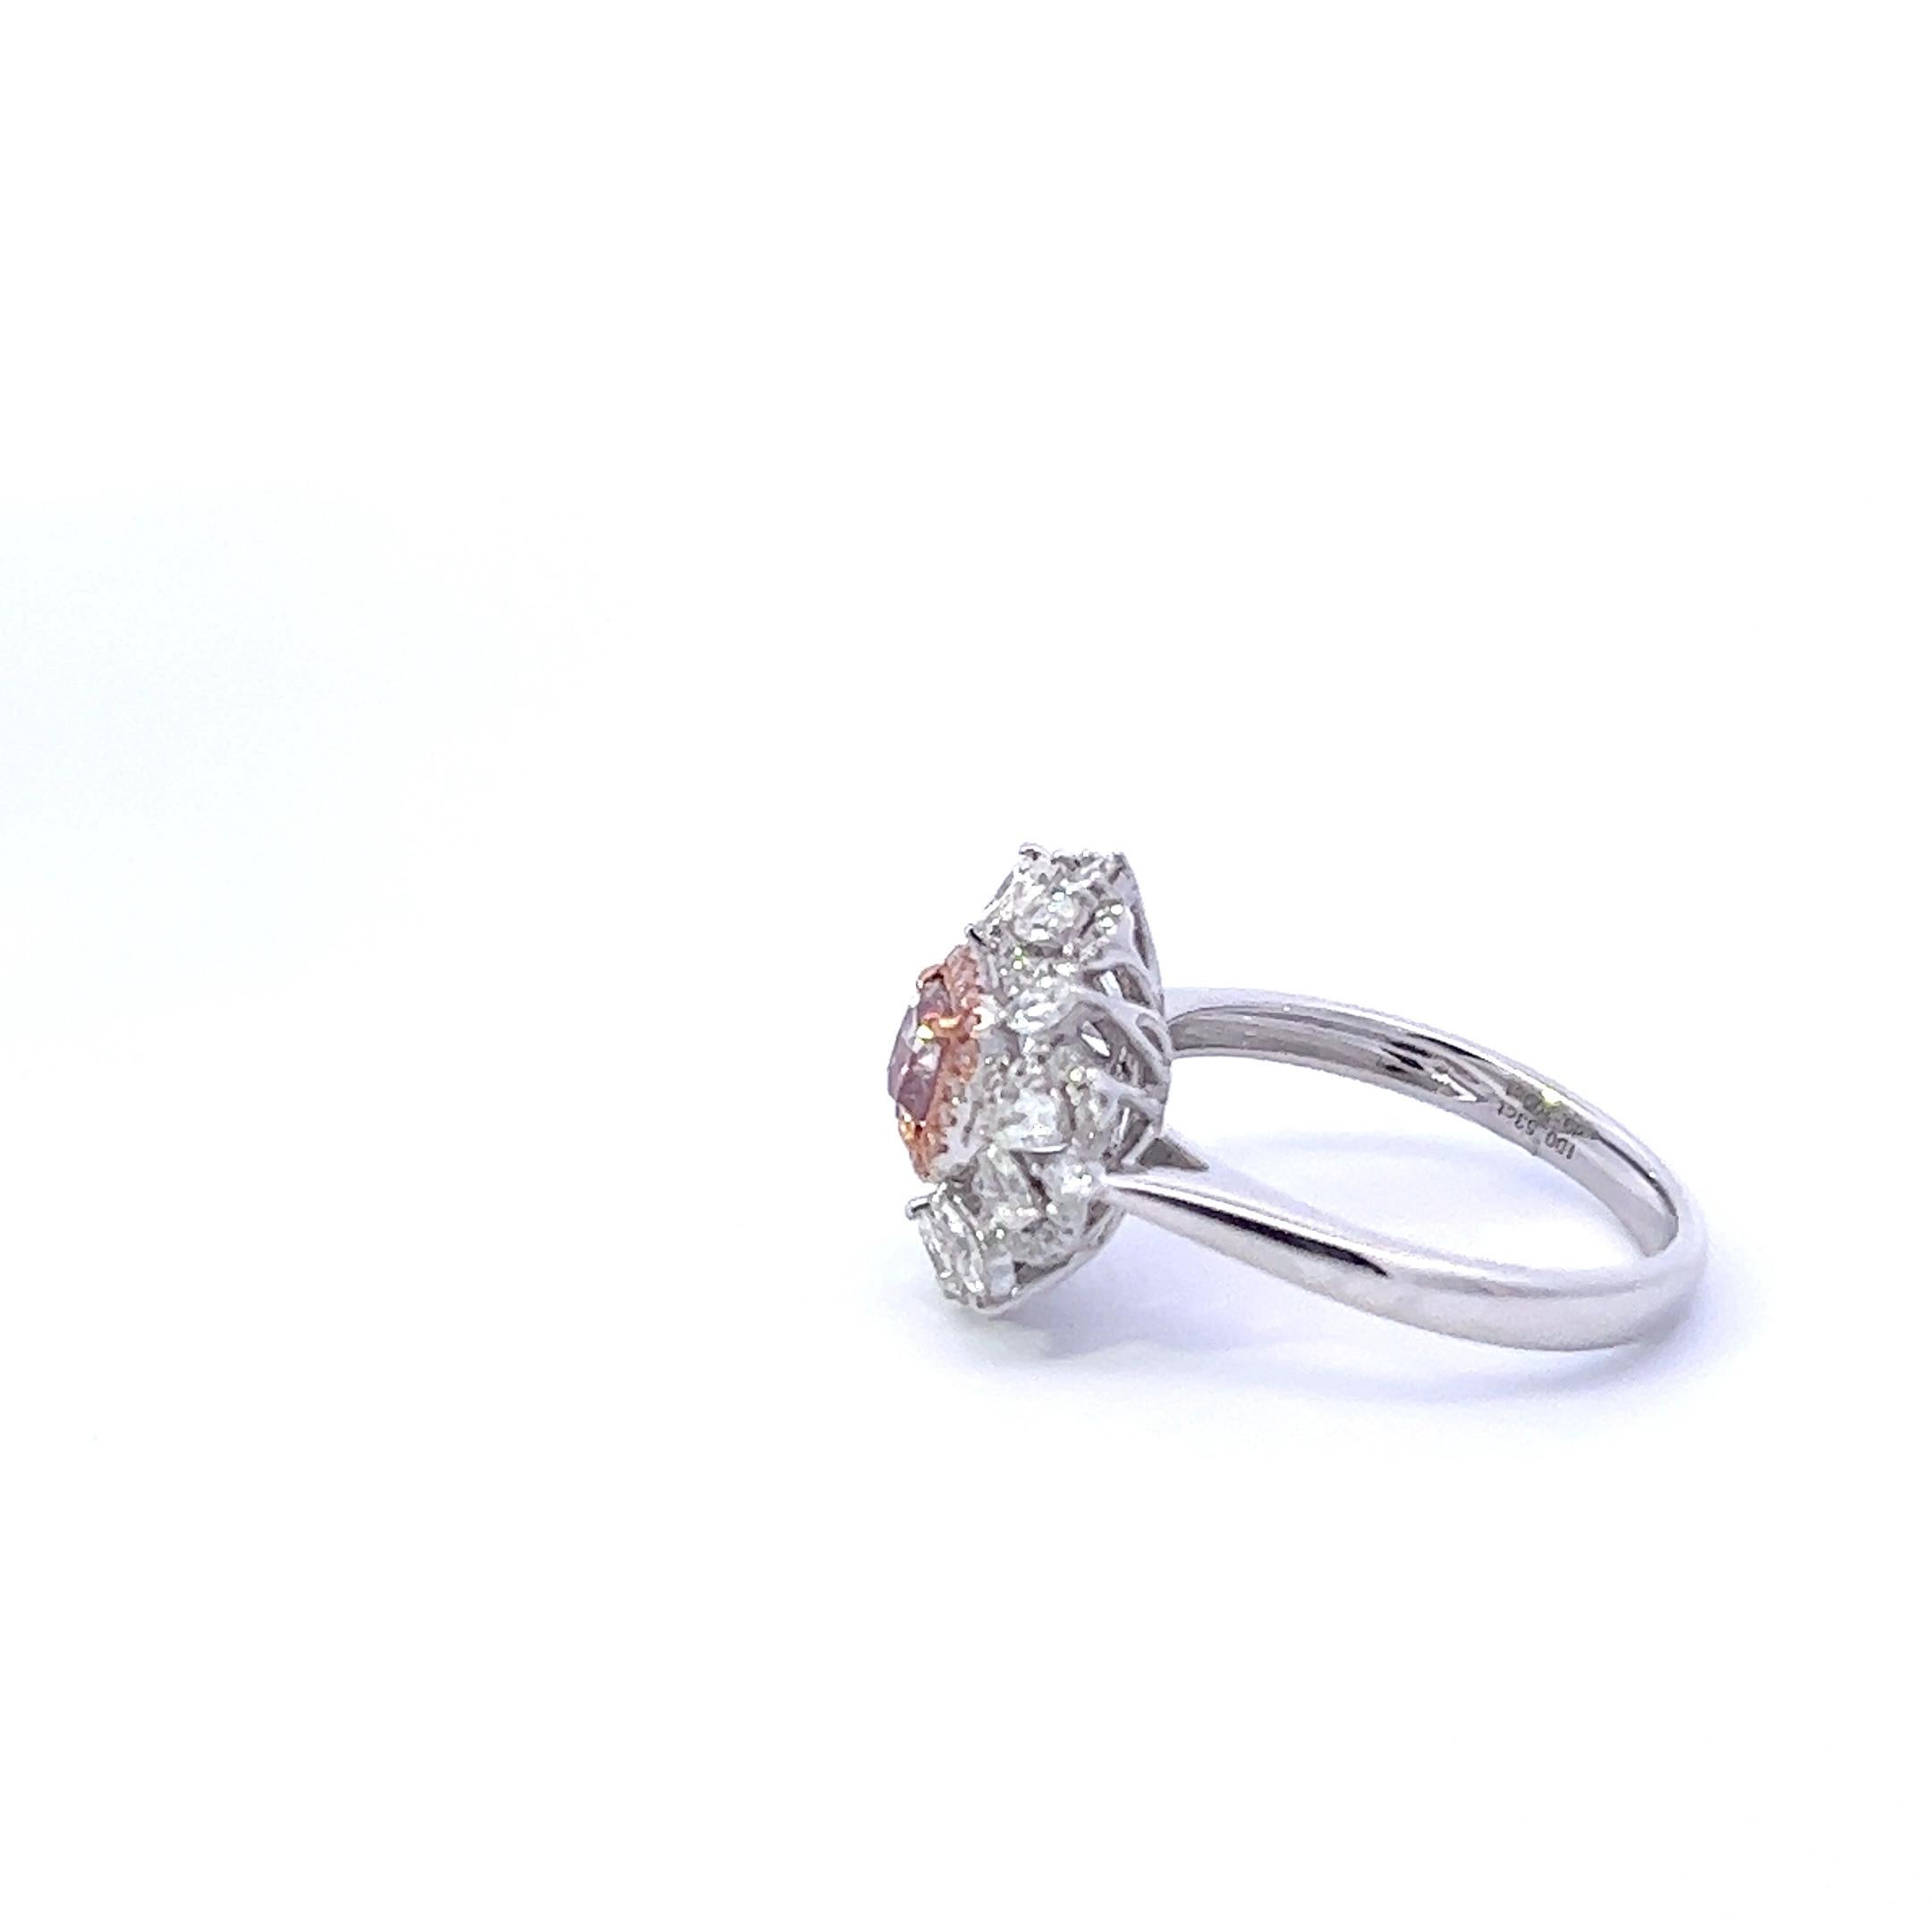 Cushion Cut GIA Certified 0.53 Carat Fancy Light Pink Diamond Ring For Sale